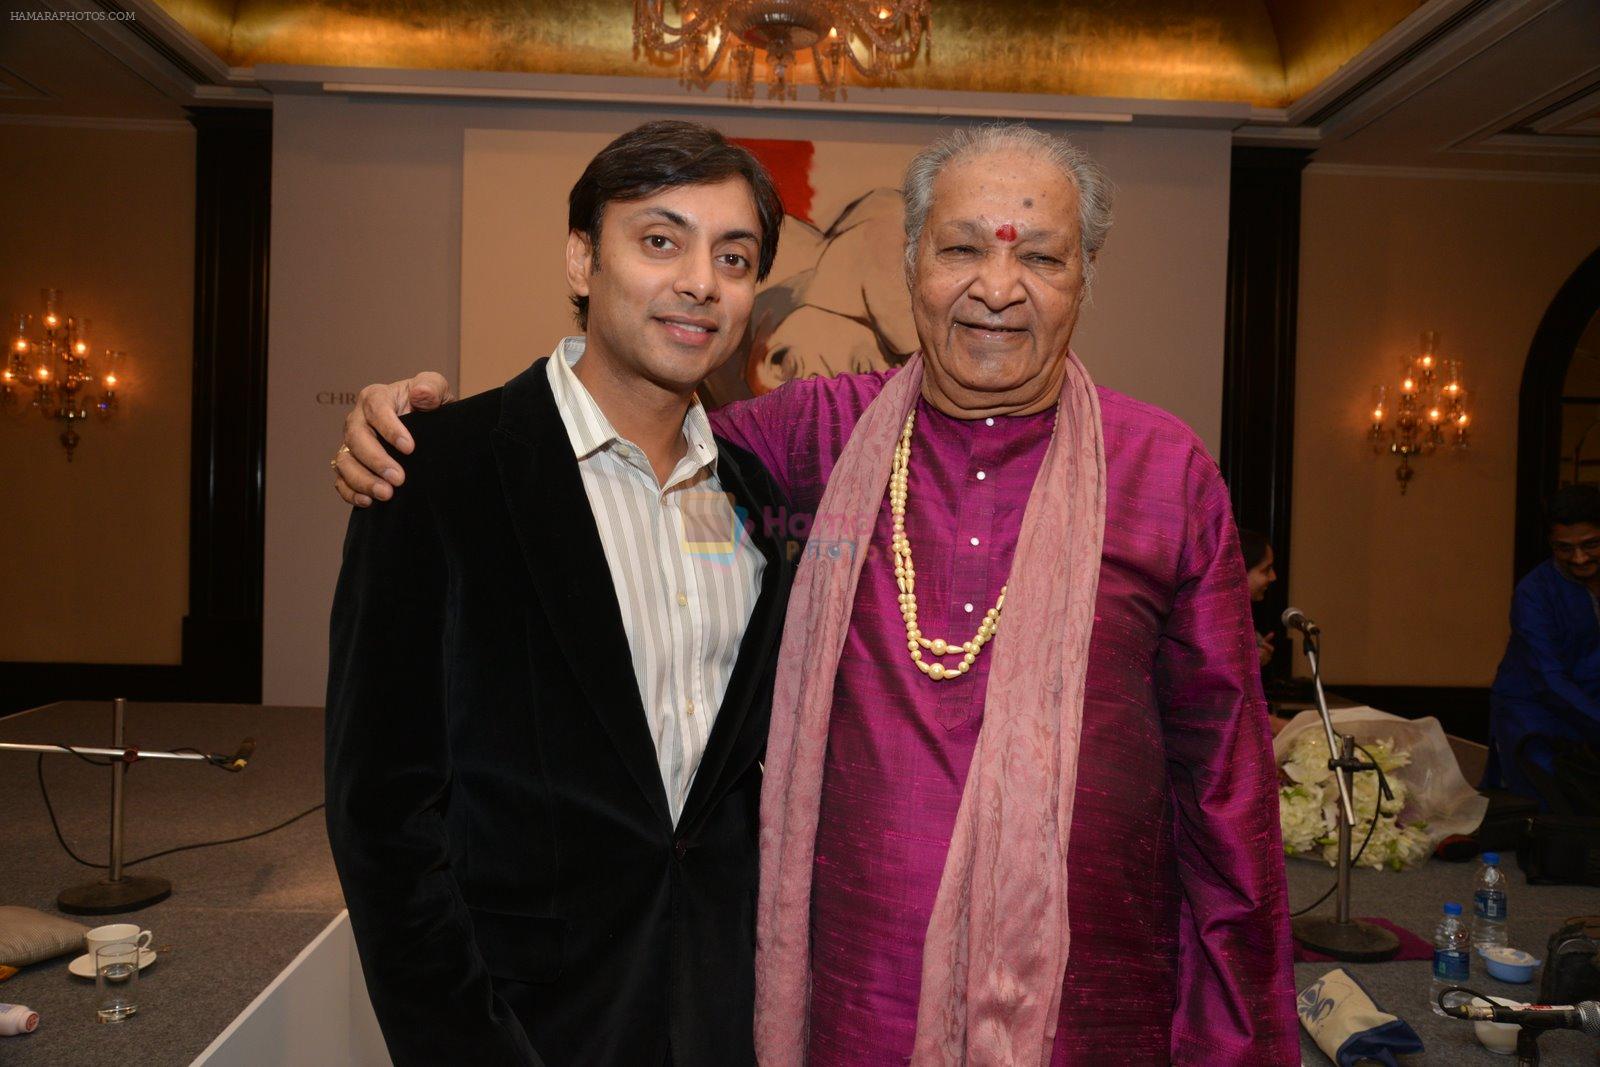 Pandit Hariprasad Chaurasia concert hosted by Christies in Taj Hotel, Mumbai on 9th Dec 2014